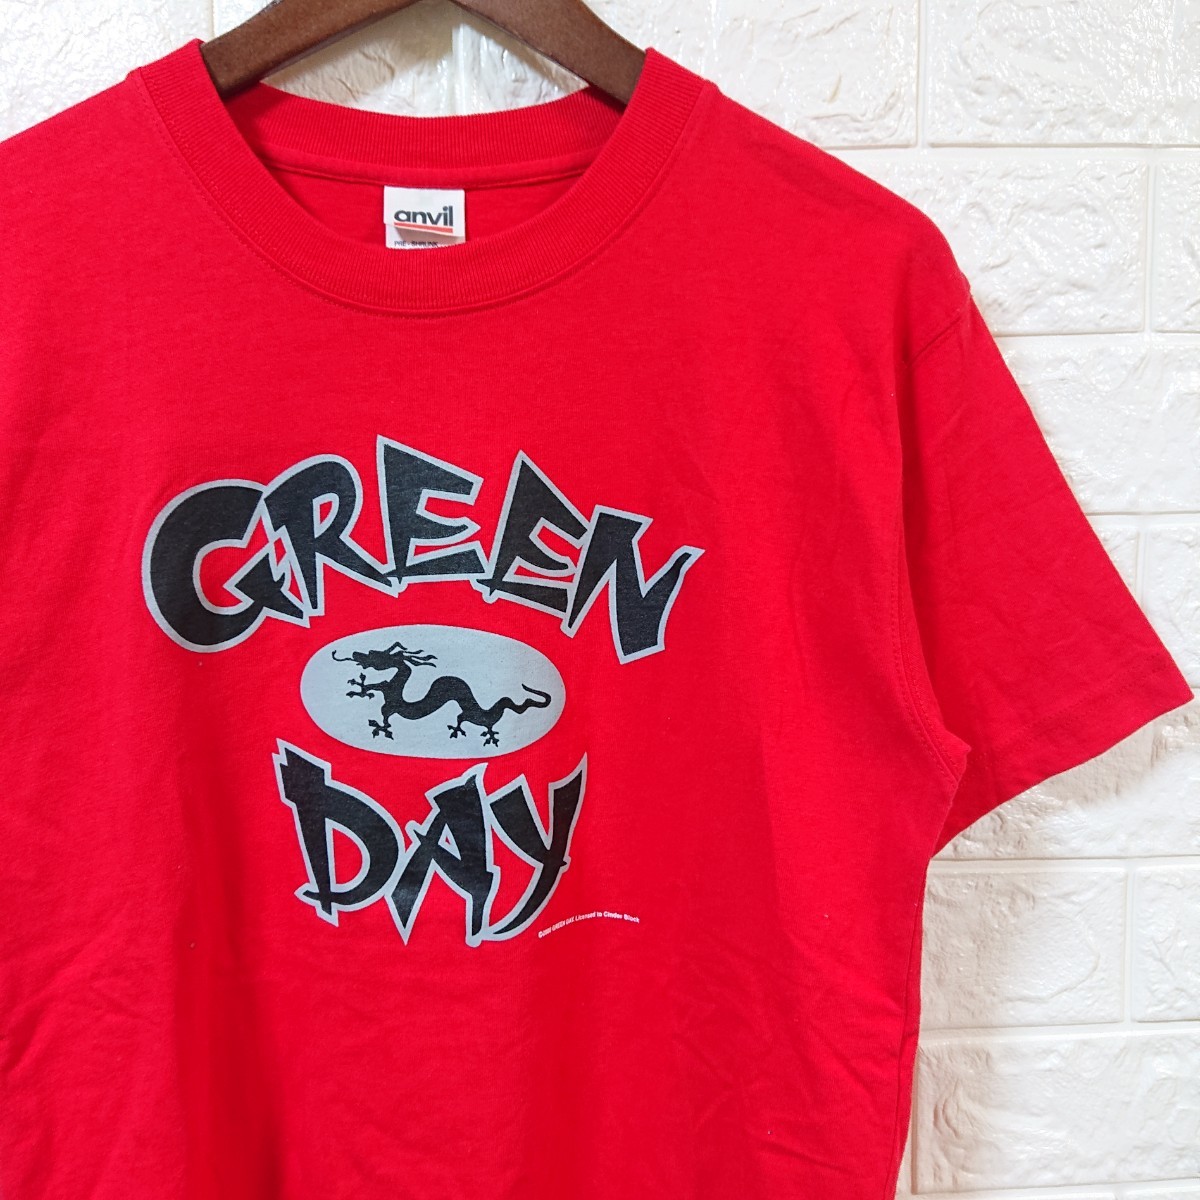 【00s】GREEN DAY グリーンデイ 2000年 ドラゴンプリント パンク ロック バンドTシャツ Sサイズ 赤 anvil製 punk rock band t-shirt teeの画像1